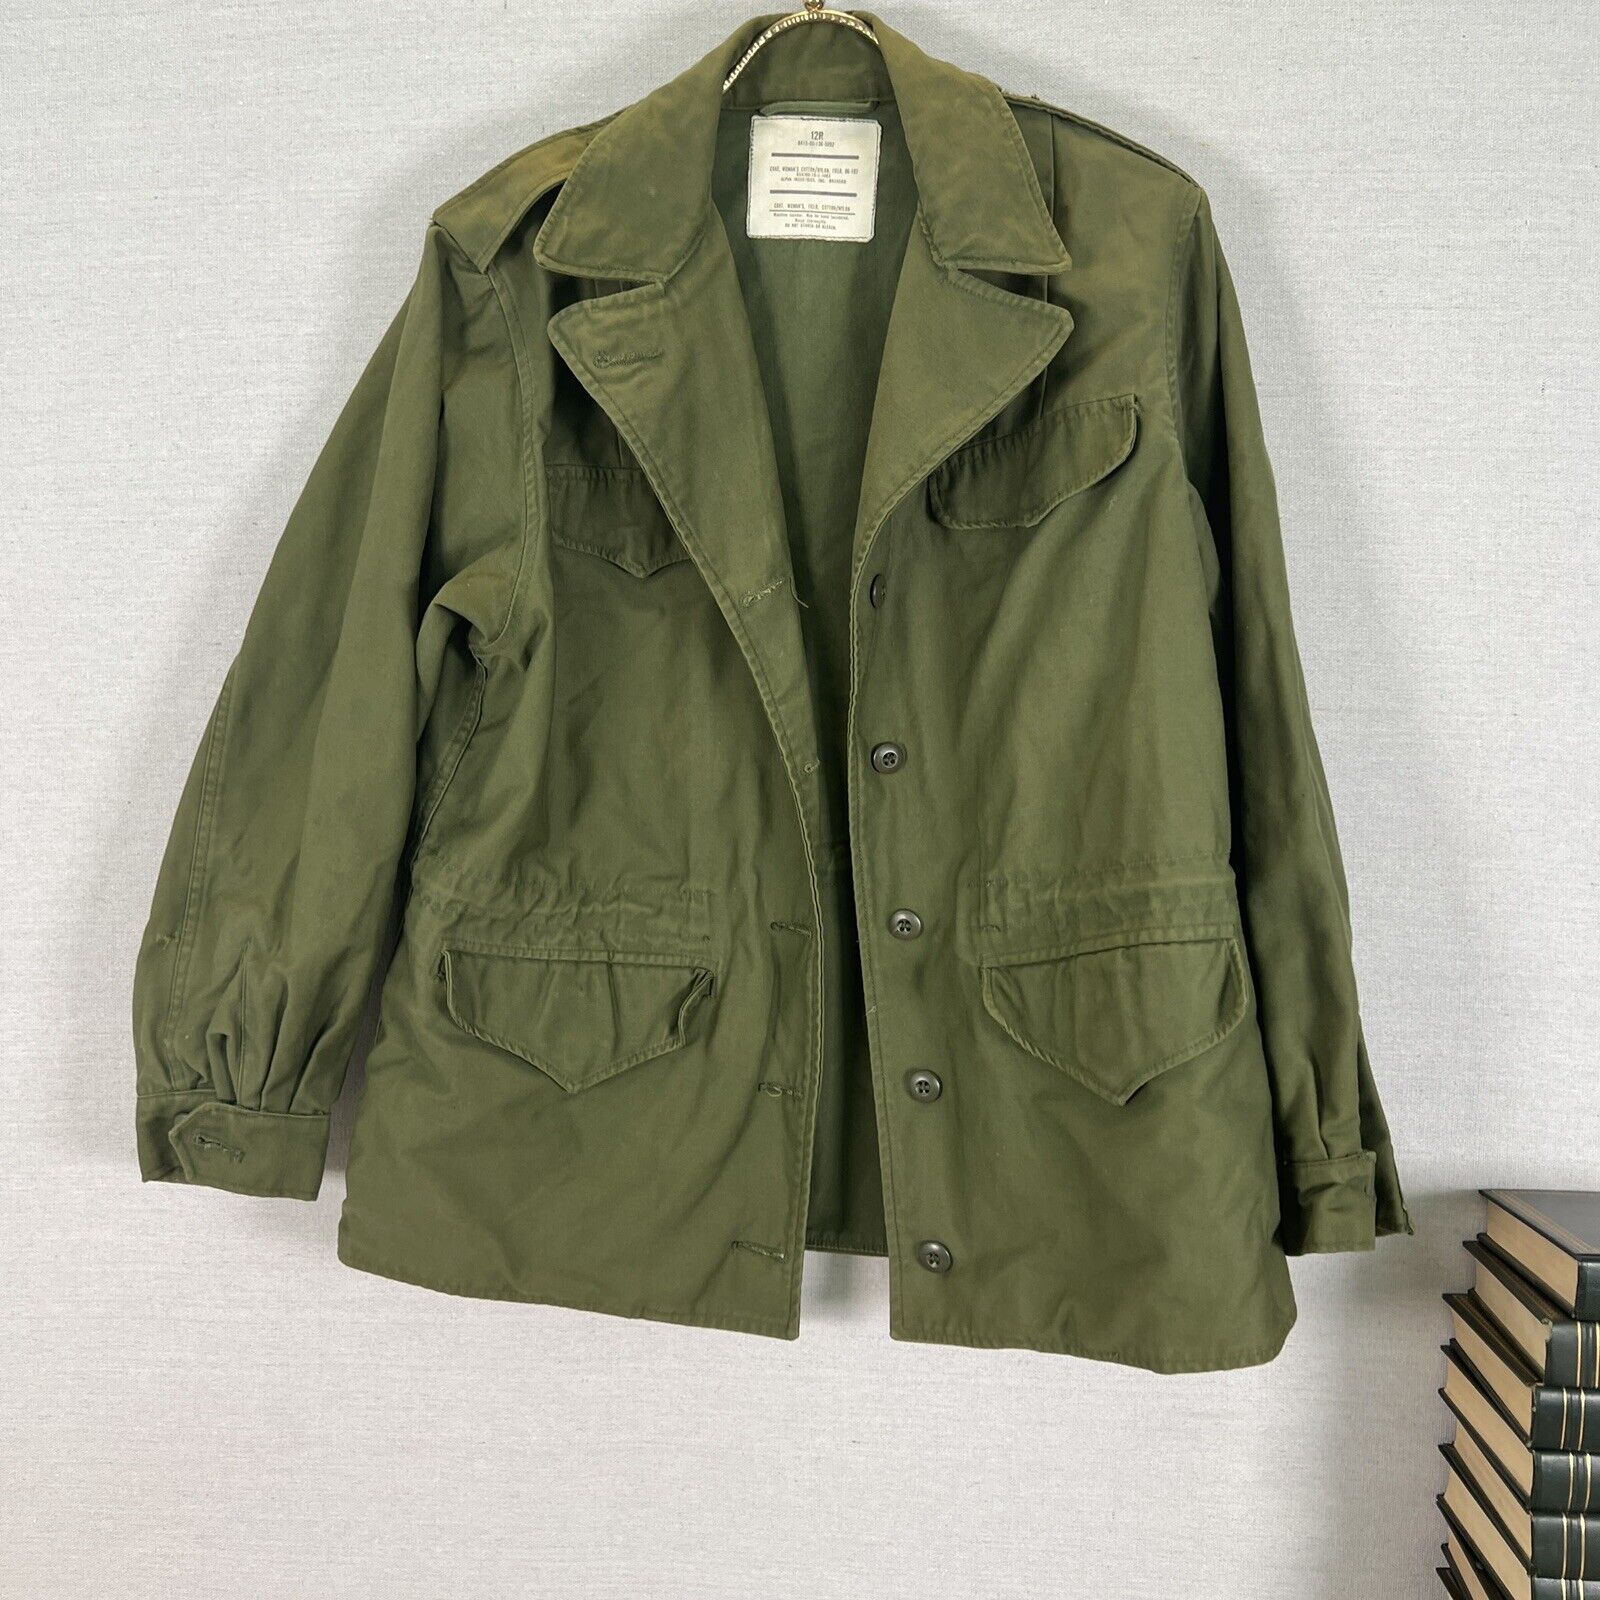 Vintage Women's Military Jacket Green Olive sz 12R